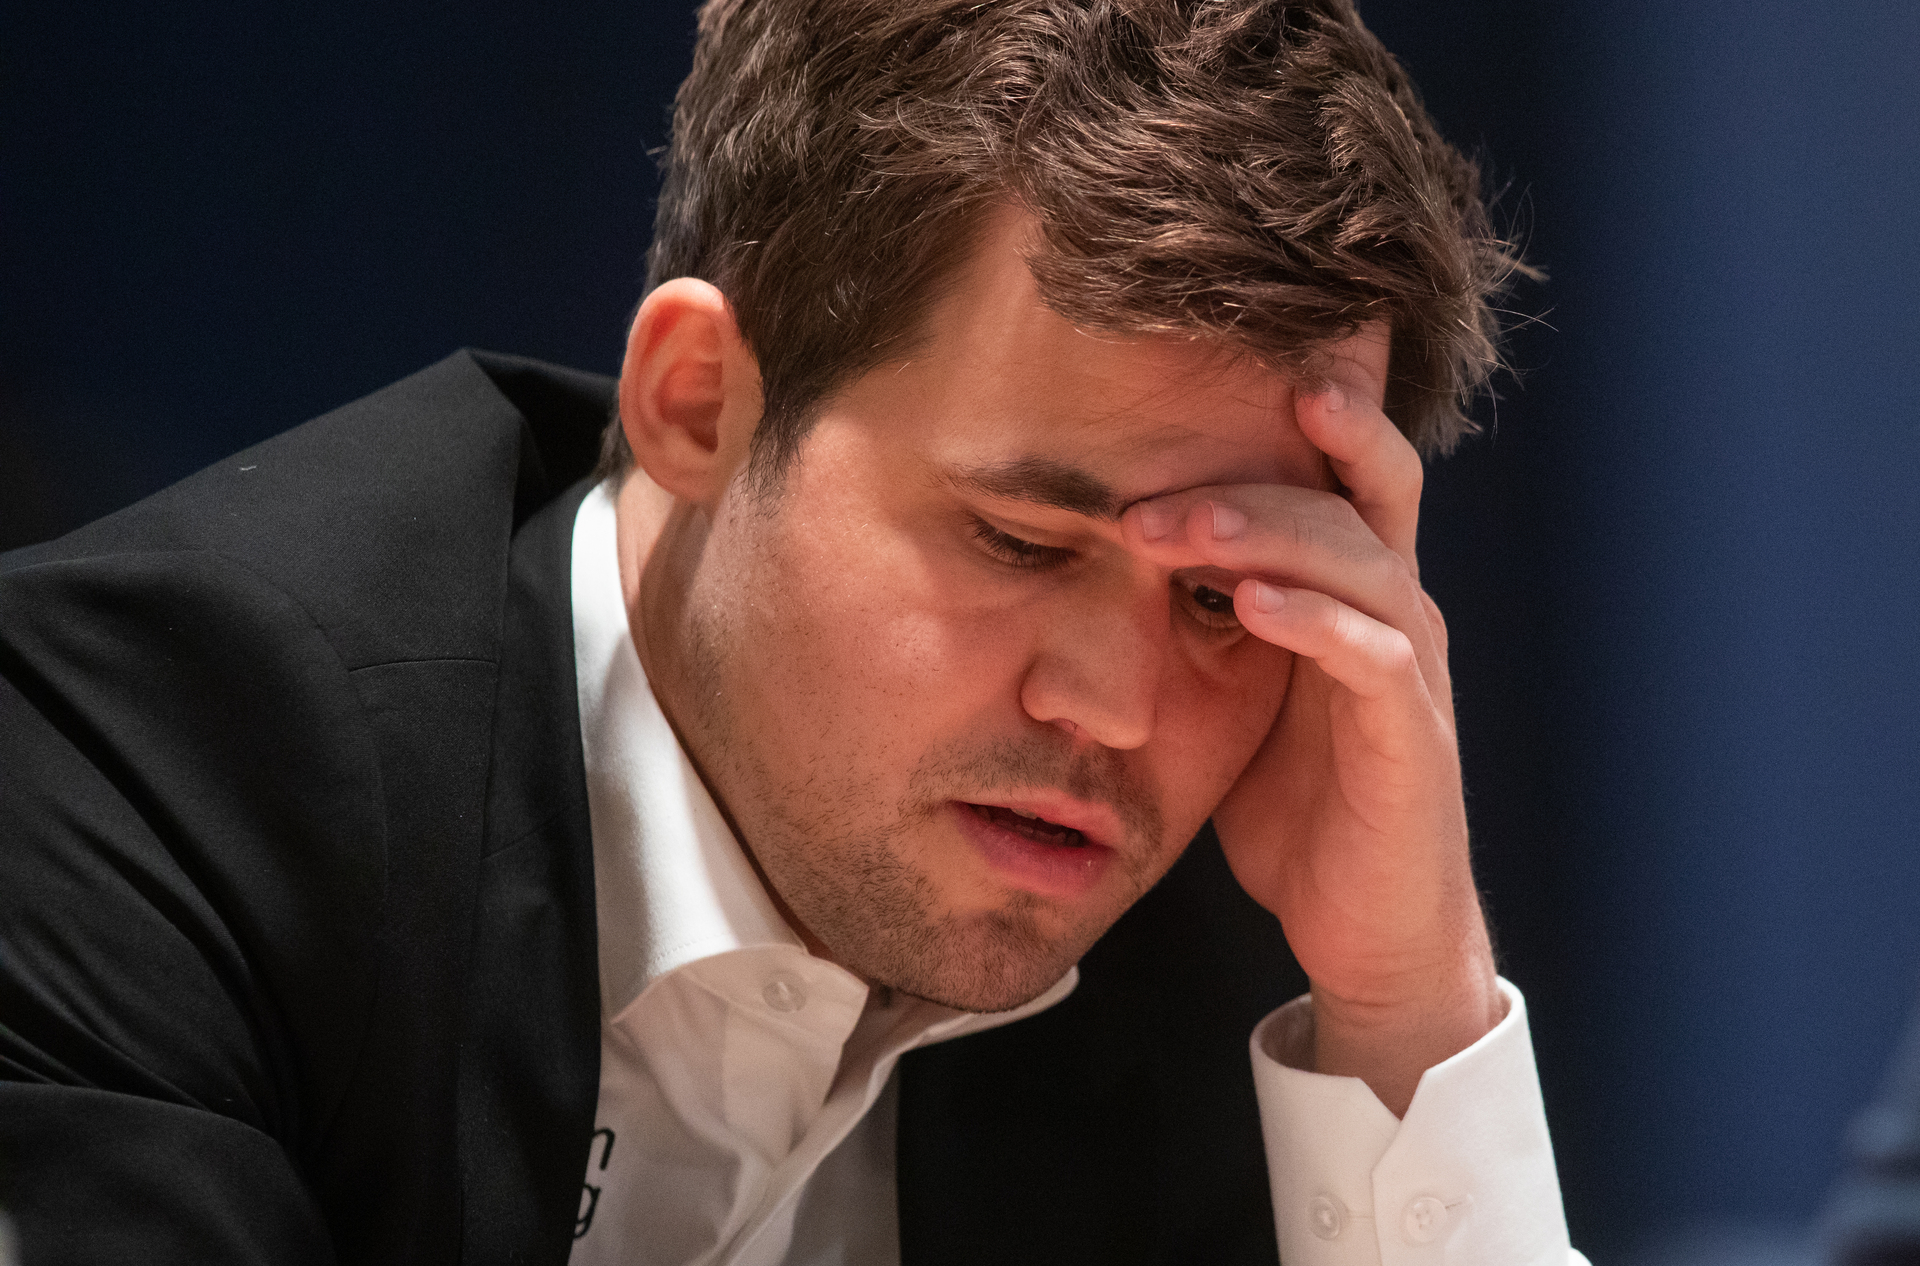 Hans Niemann Beats Magnus Carlsen in Just 2 Moves 